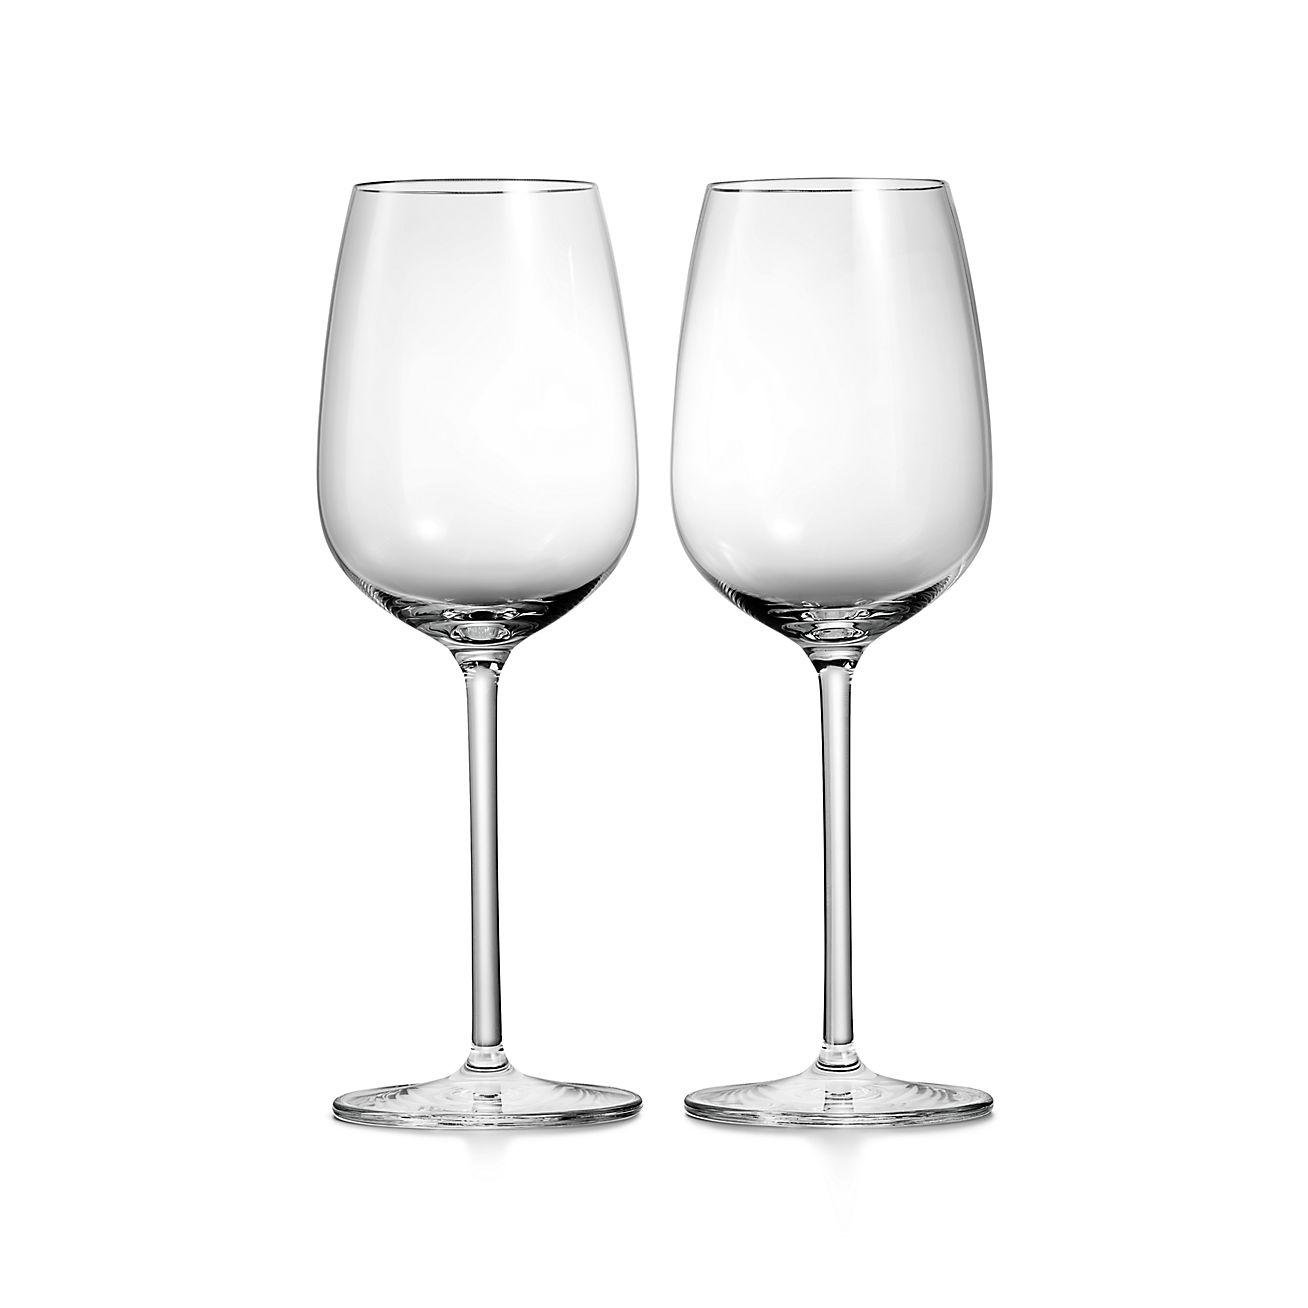 https://media.tiffany.com/is/image/Tiffany/EcomItemL2/tiffany-home-essentialsall-purpose-white-wine-glasses-70223716_1055262_ED.jpg